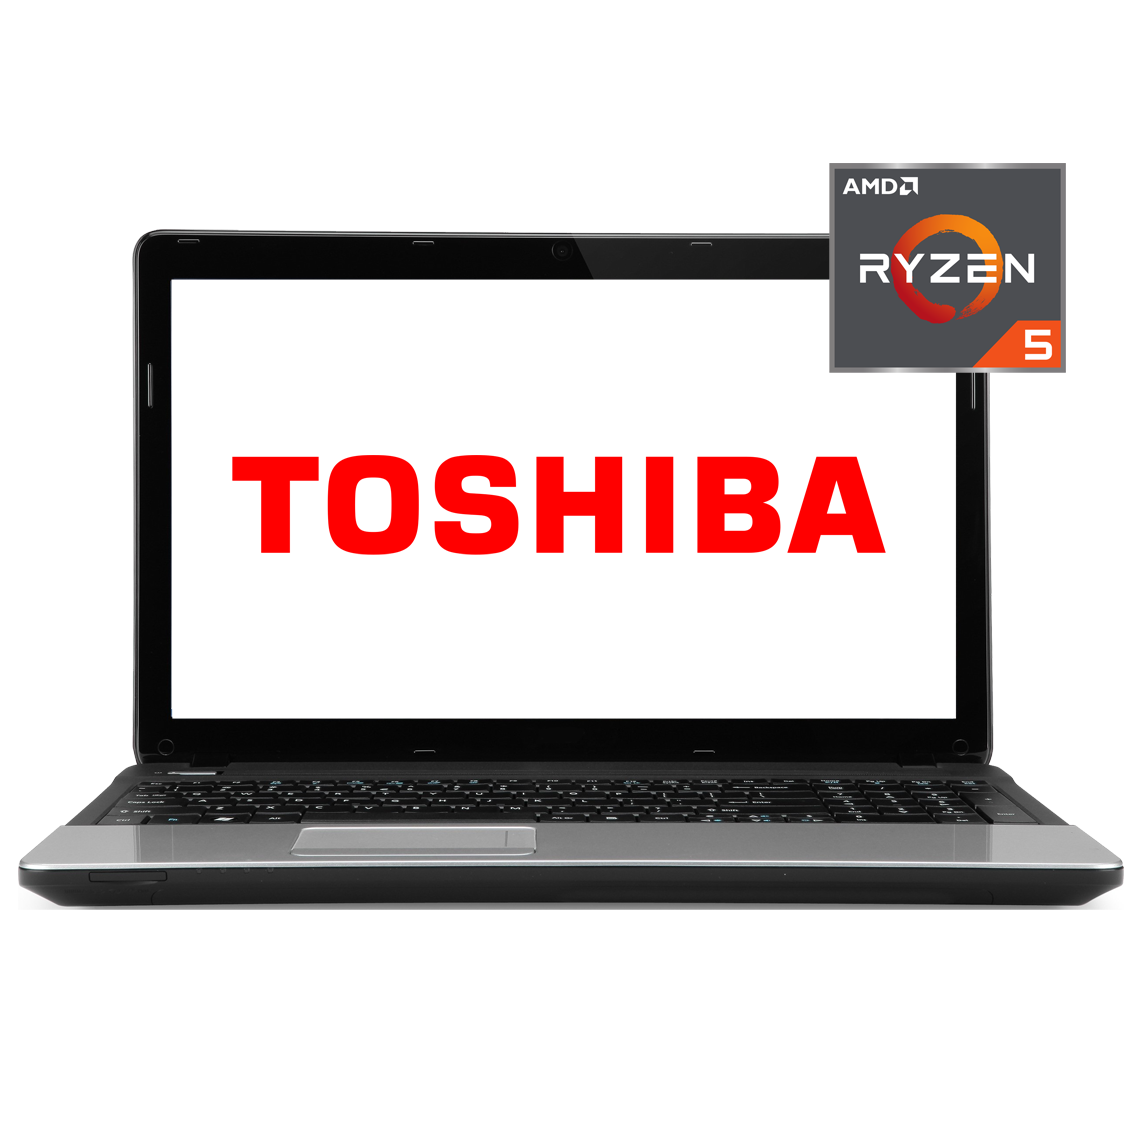 Toshiba - 13.3 inch AMD Ryzen 5